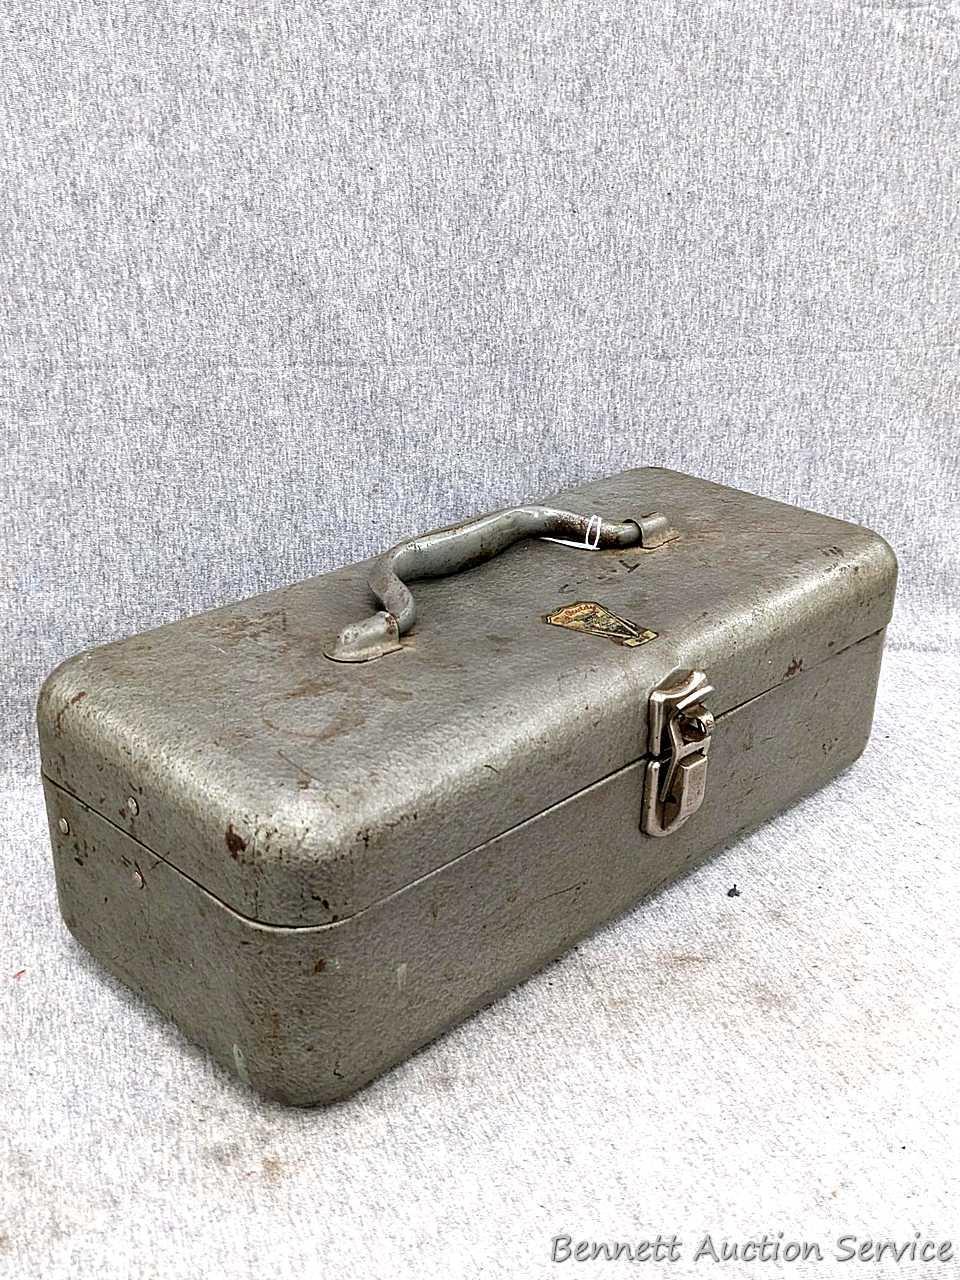 Vintage Handled Metal My Buddy tackle box and